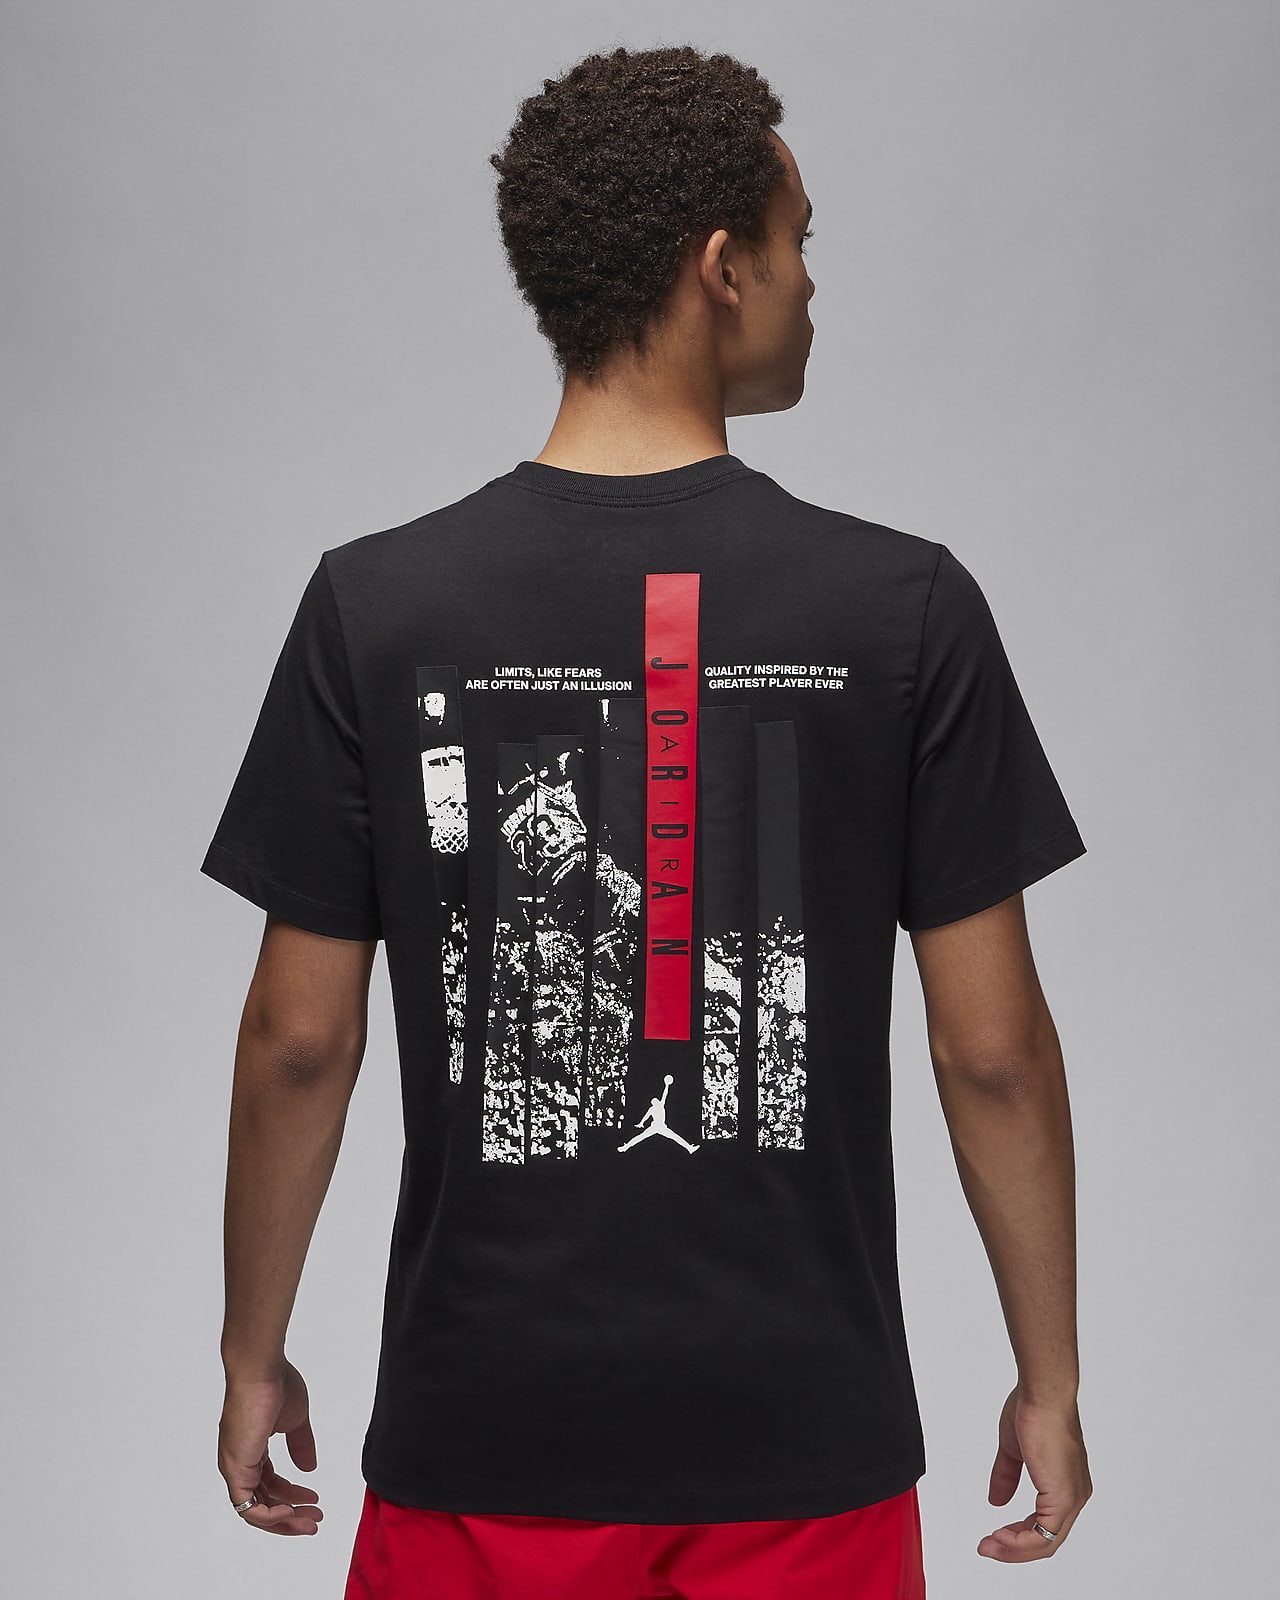 Nike Air Graphic T-Shirt in Black